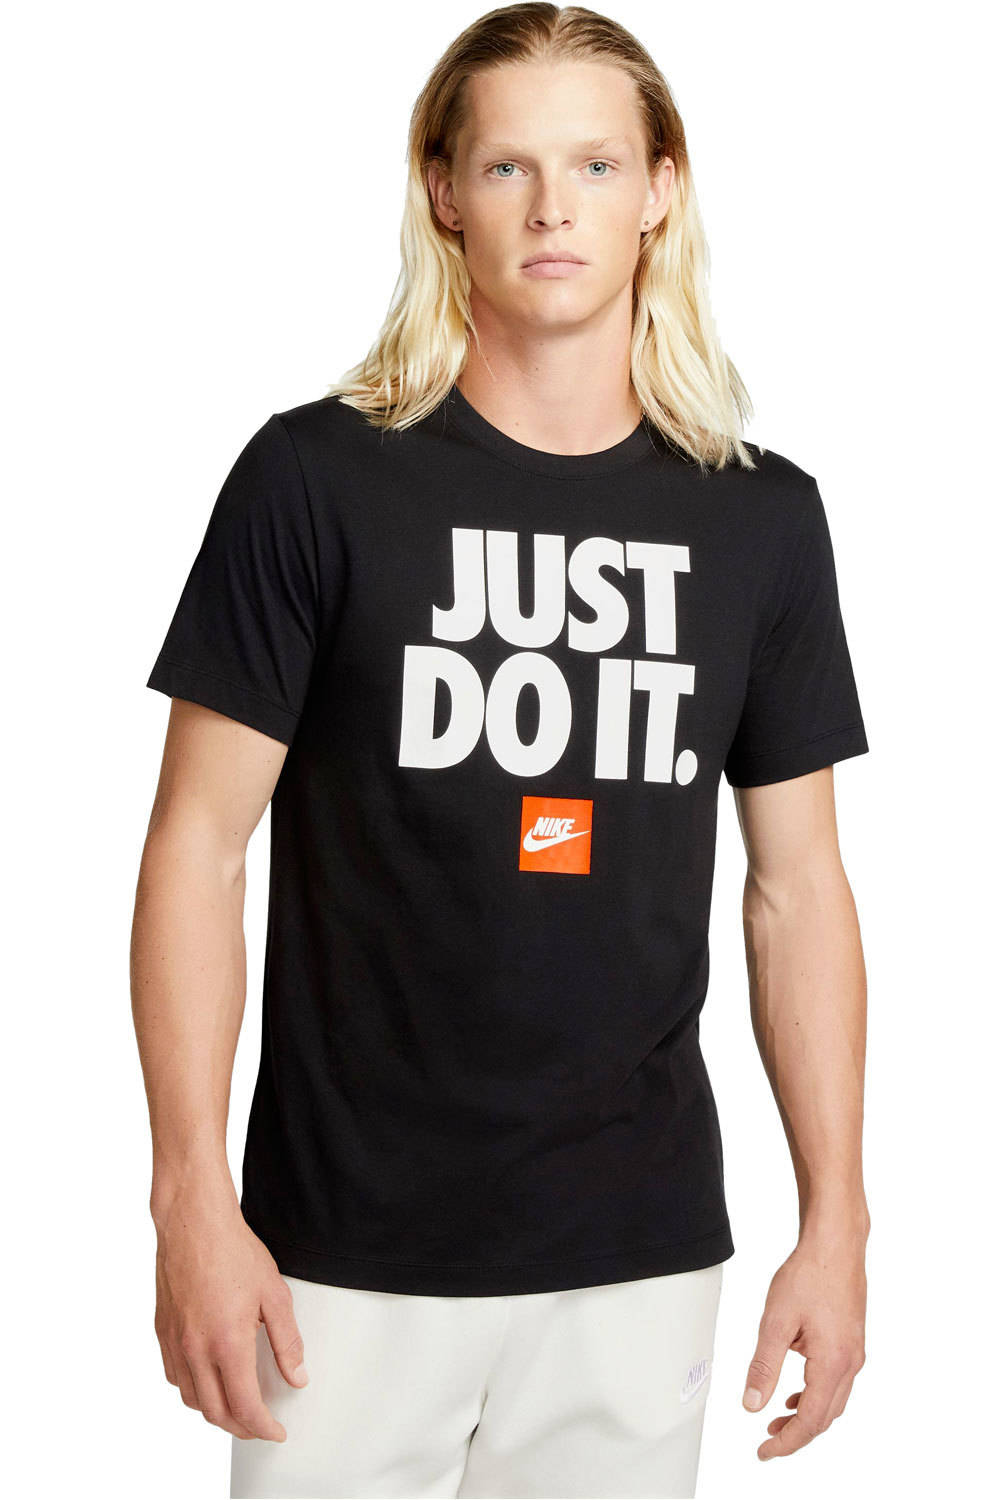 Nike camiseta manga corta hombre M NSW TEE FRAN JDI VERBIAGE vista frontal